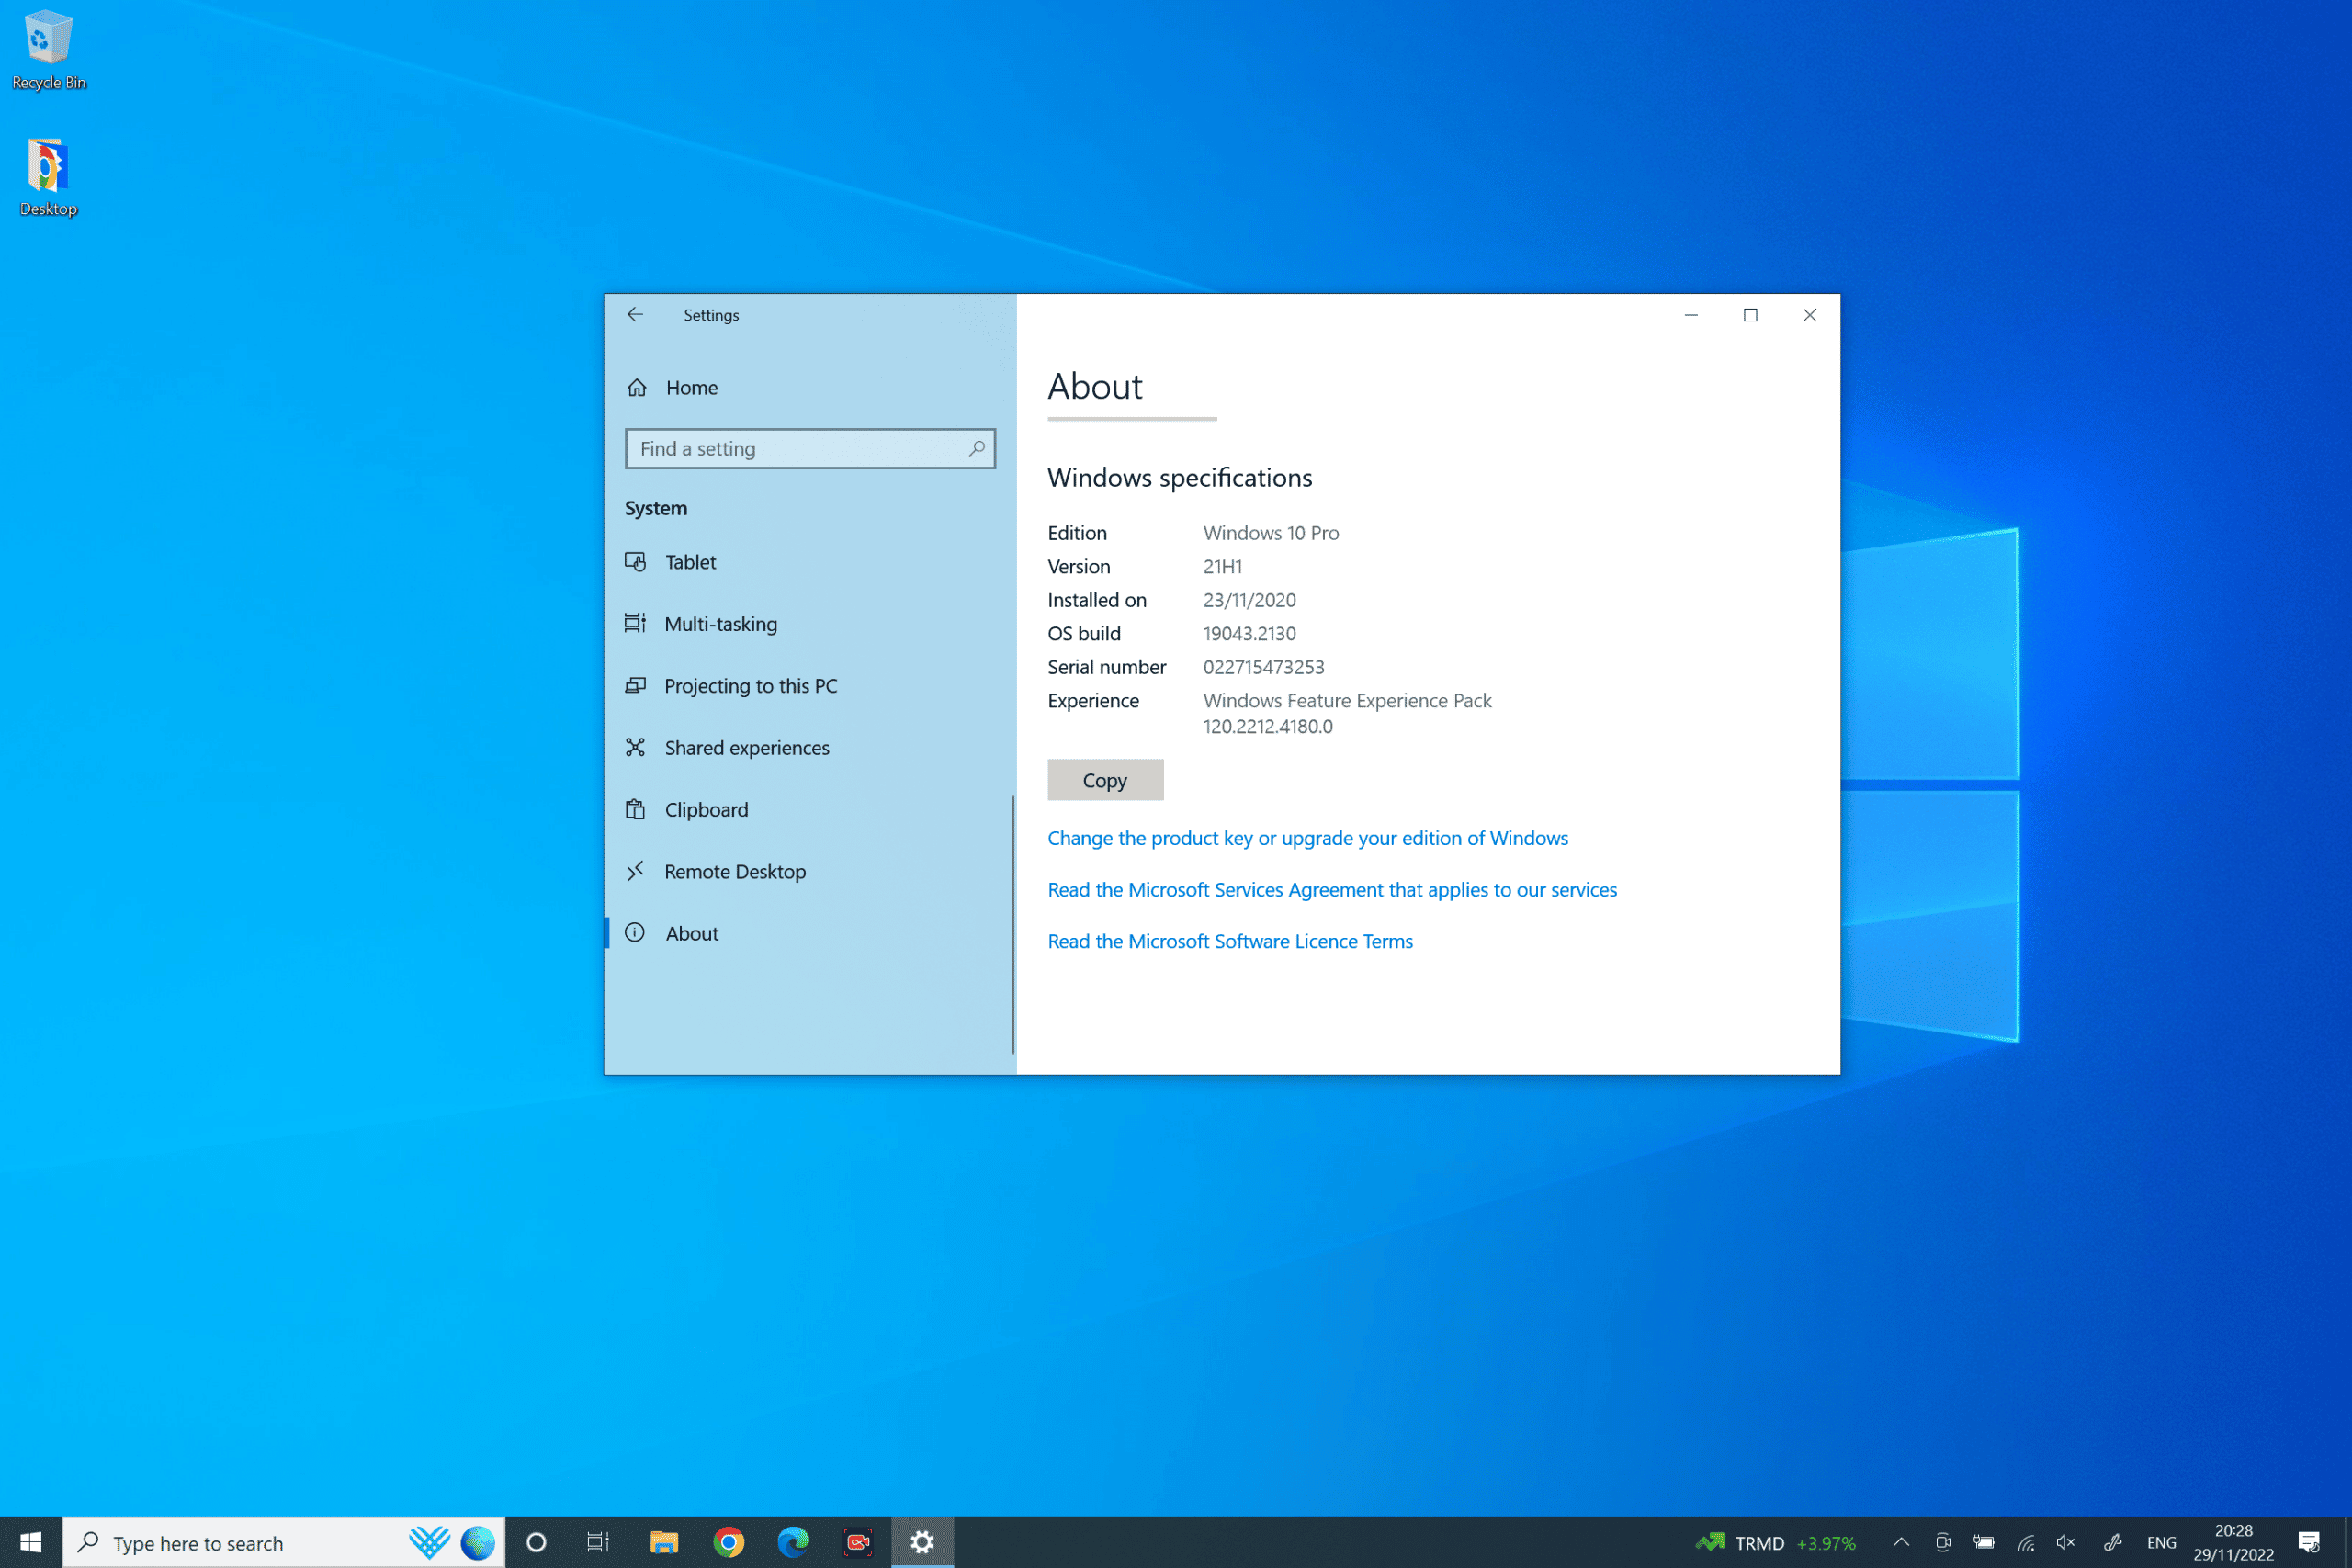 Windows 10 Pro Settings